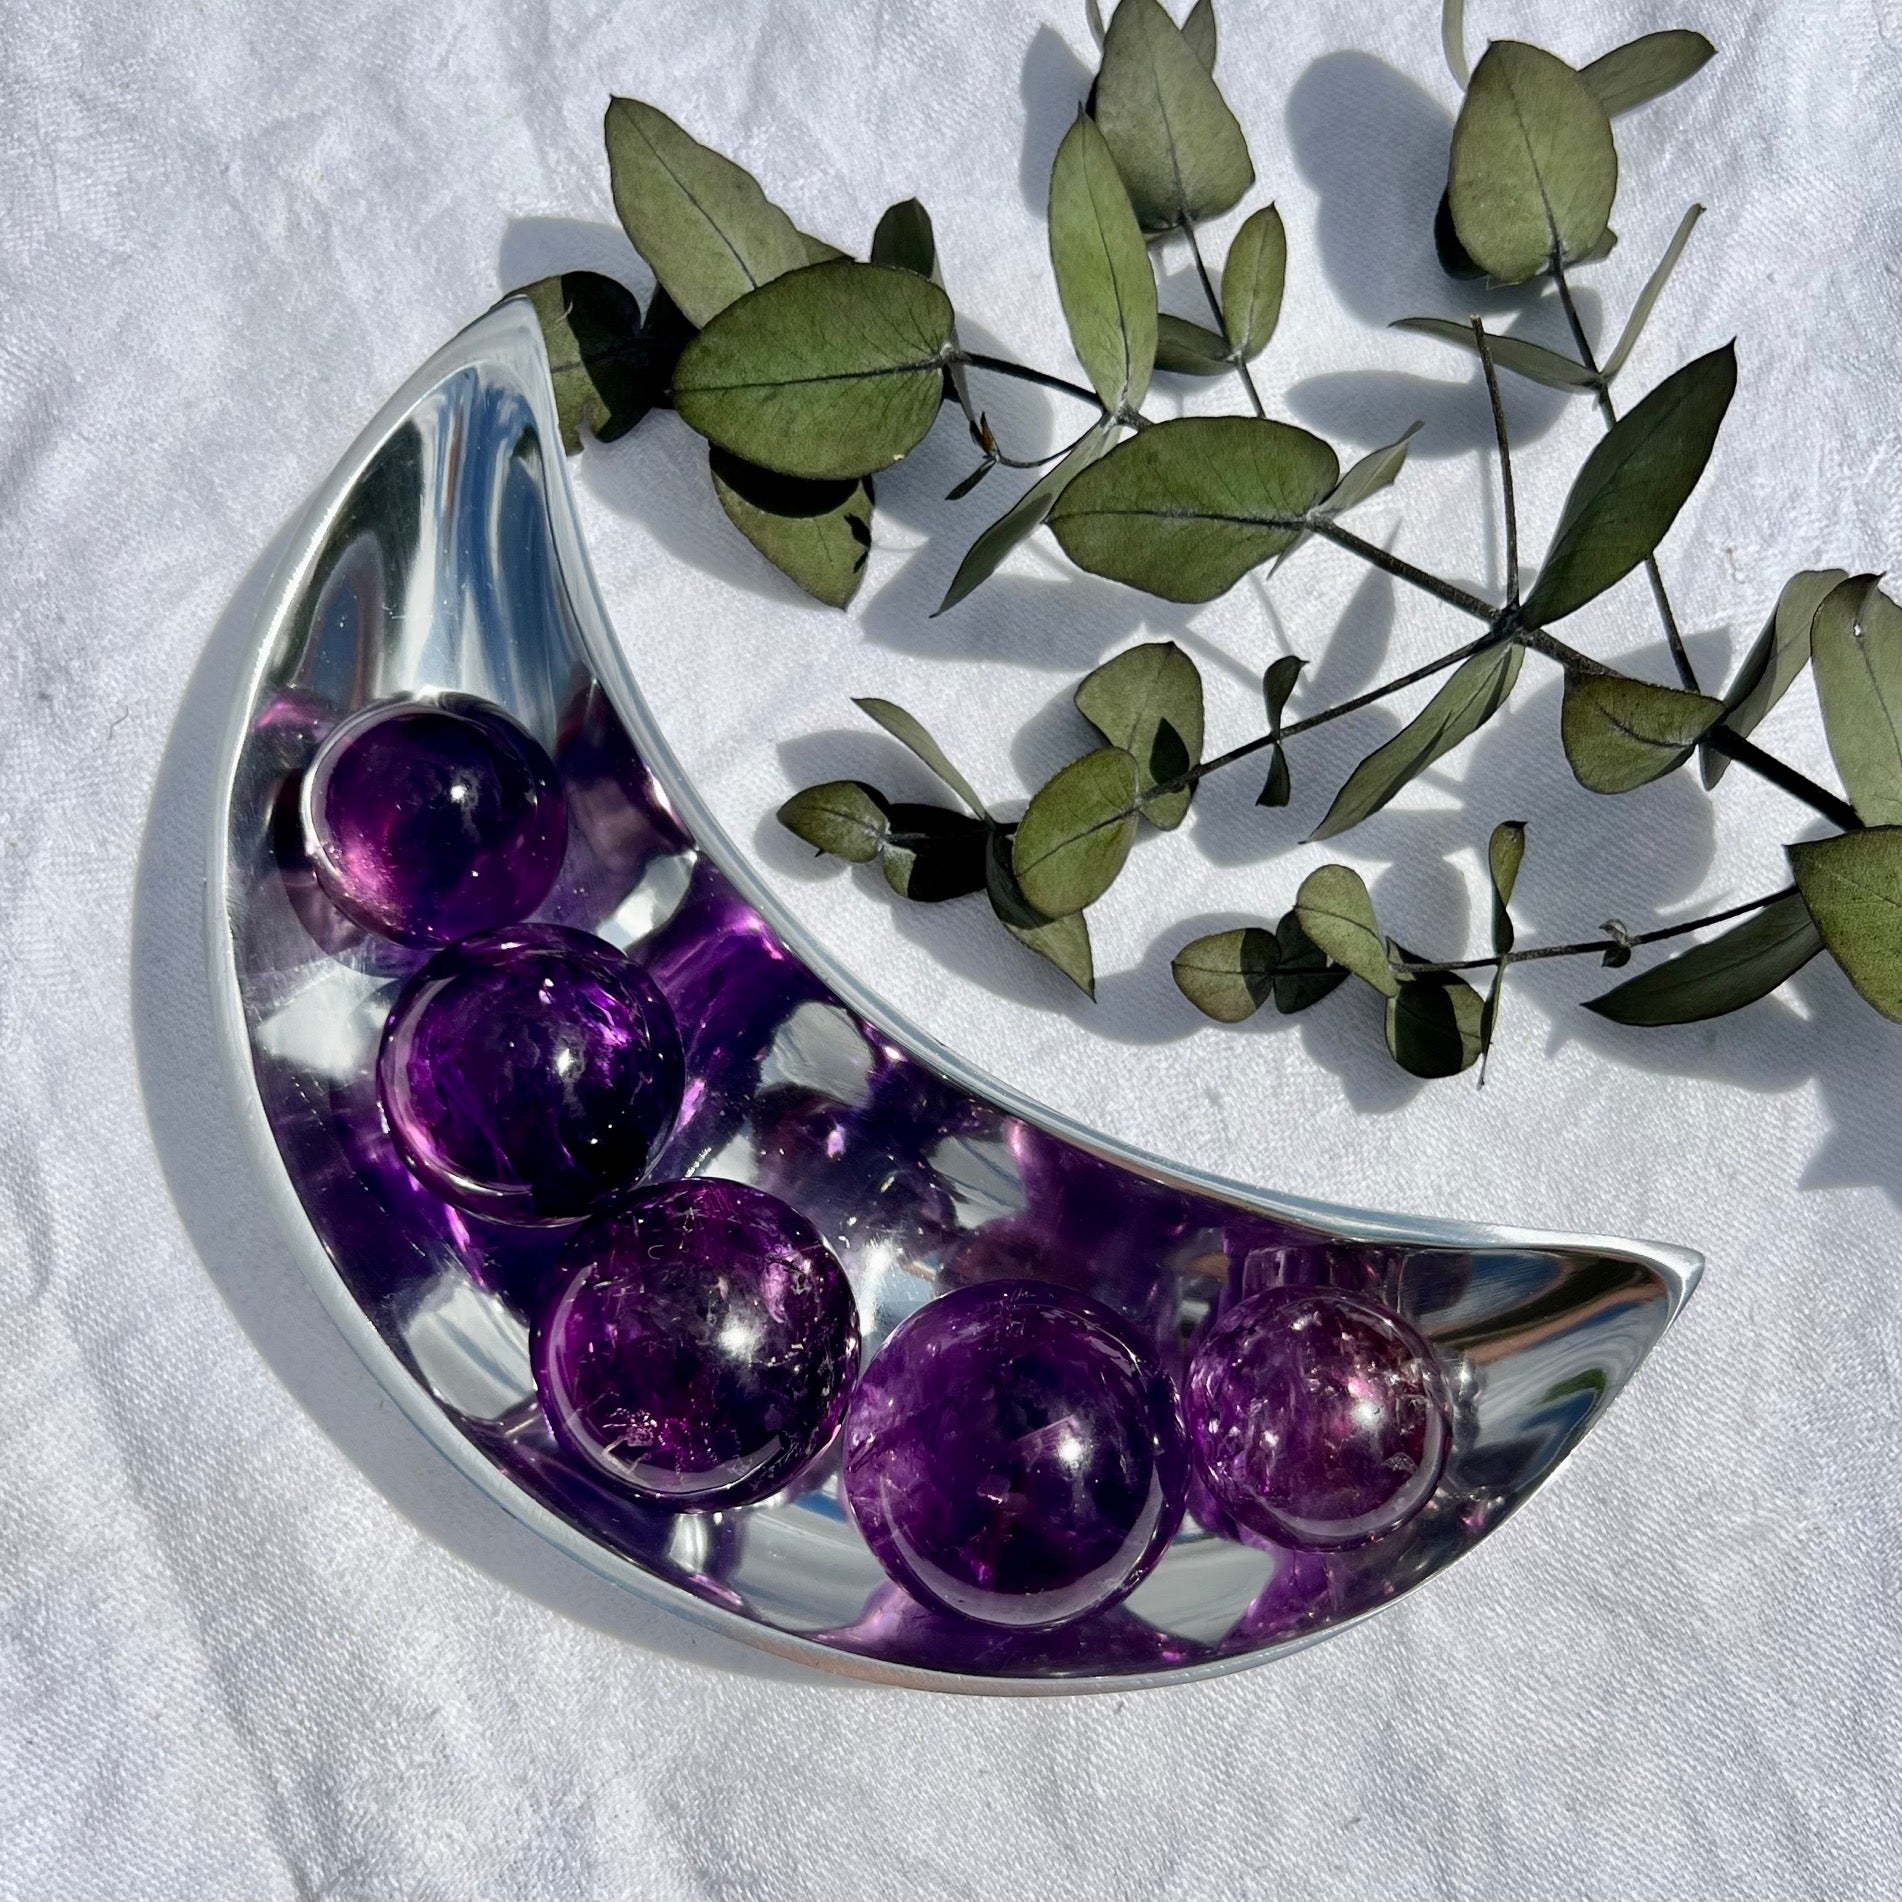 Silver moon bowl with five vivid purple amethyst spheres in it